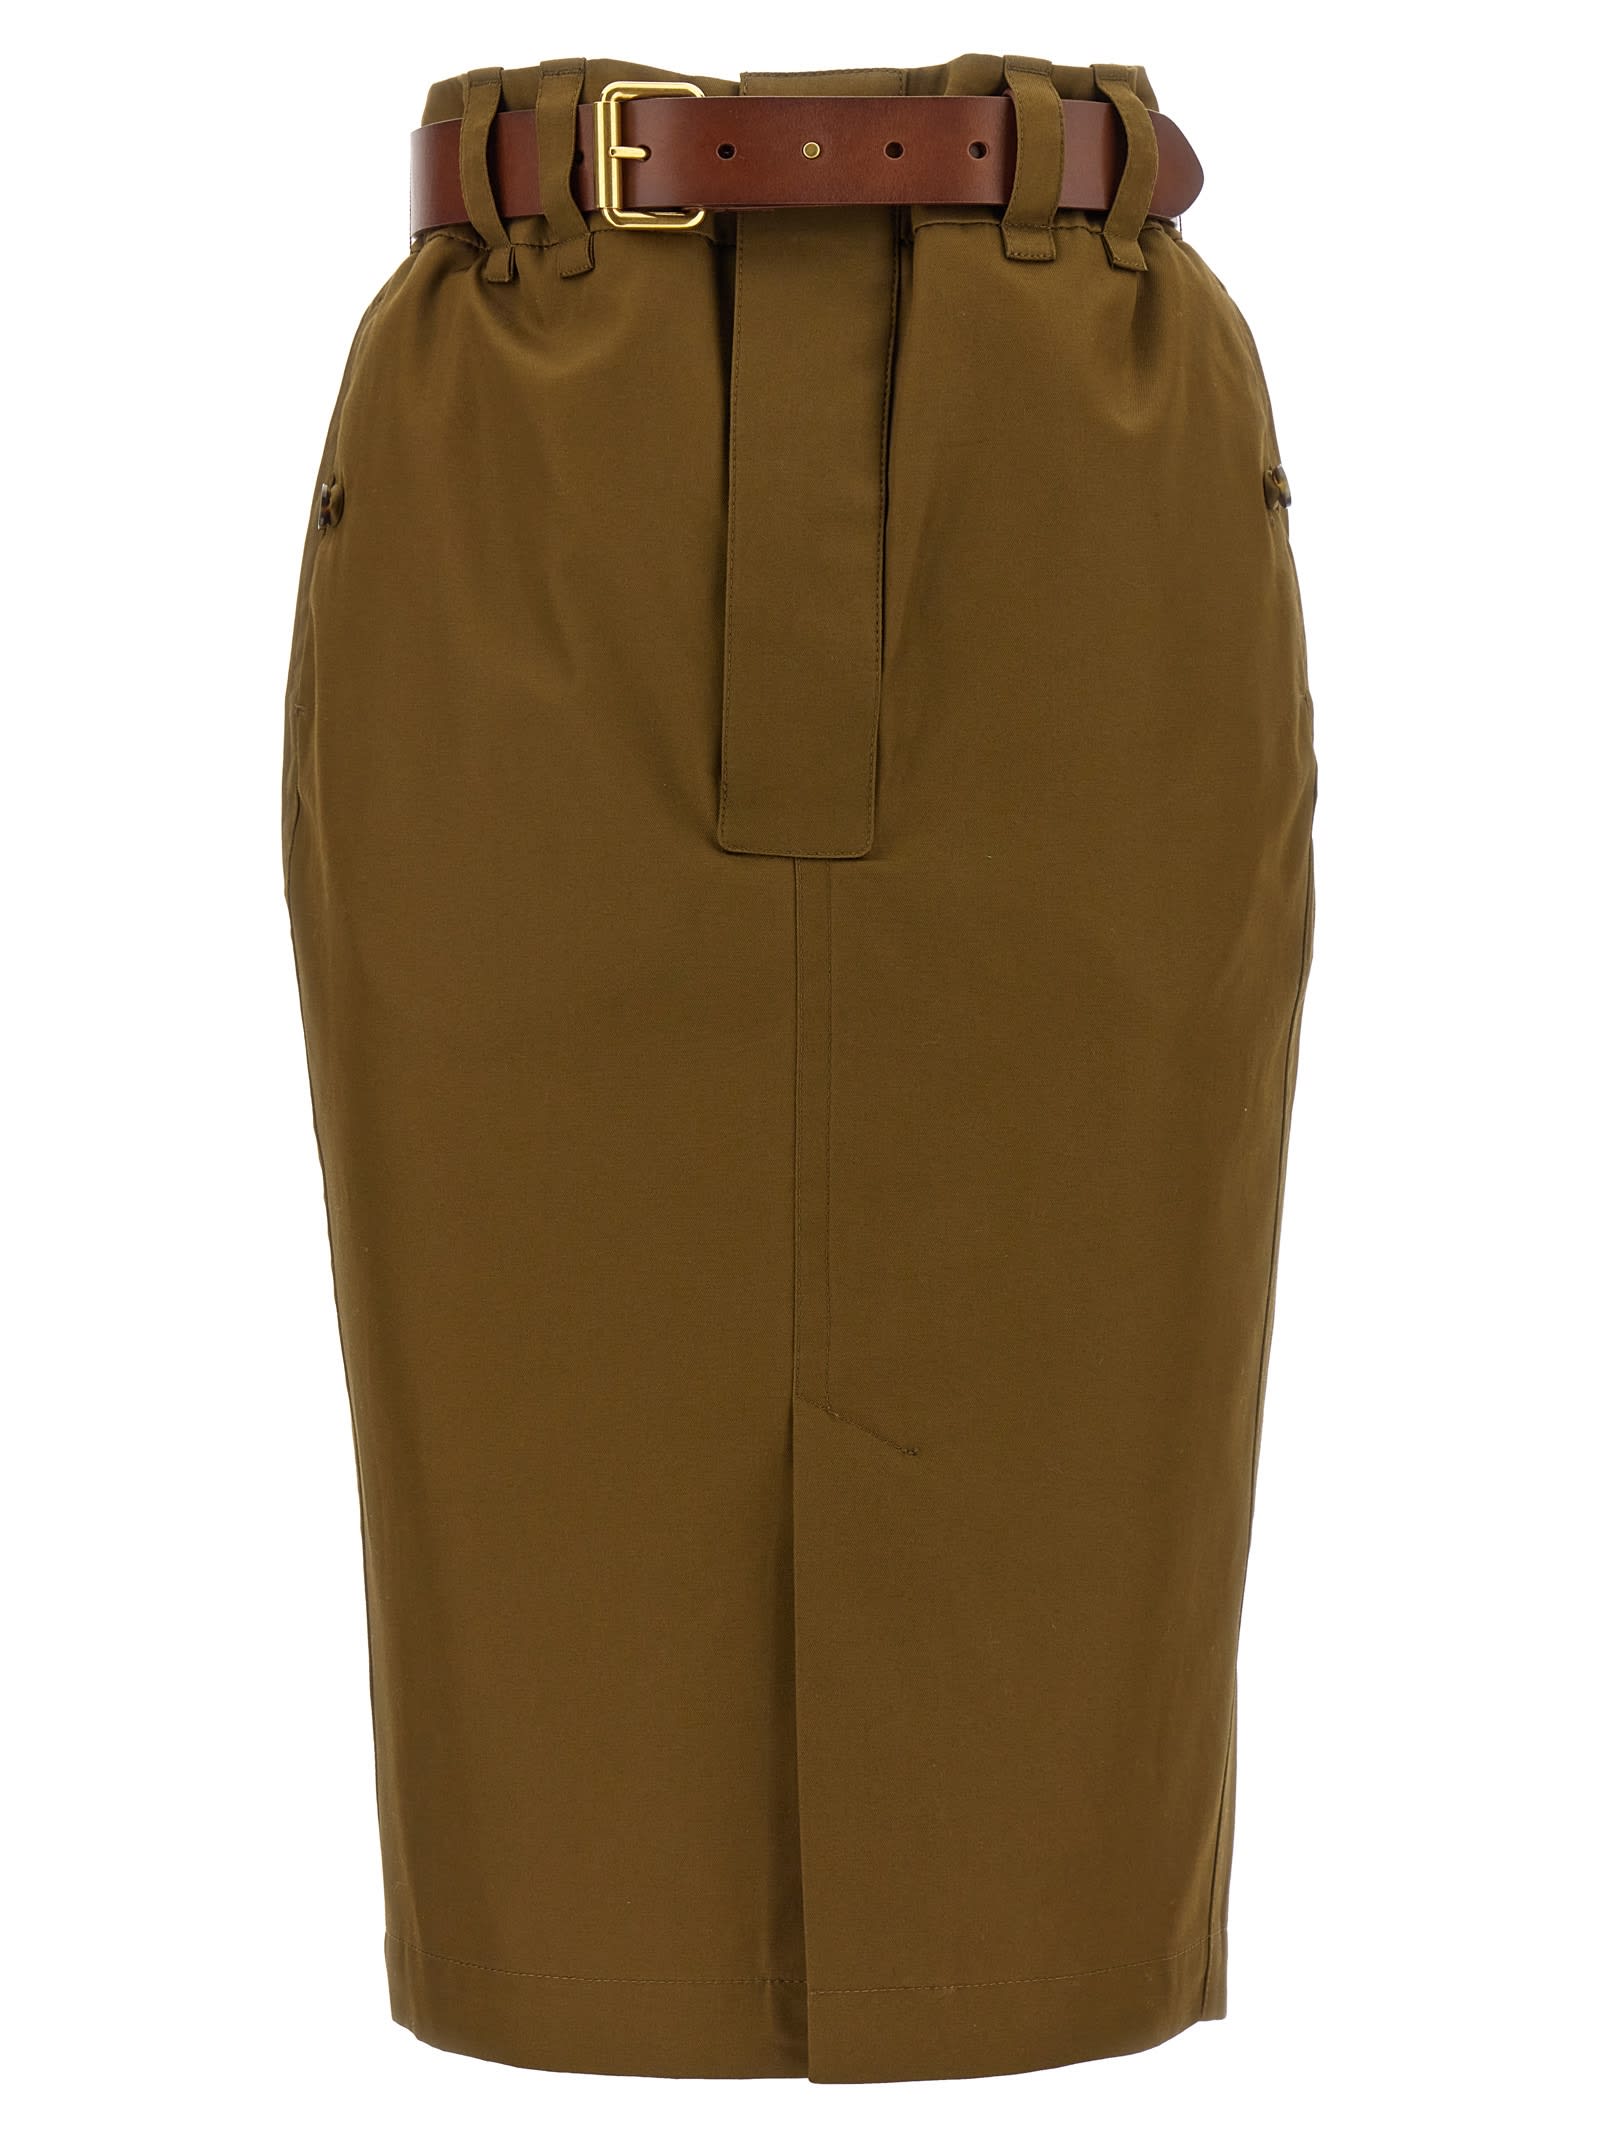 saharienne Skirt